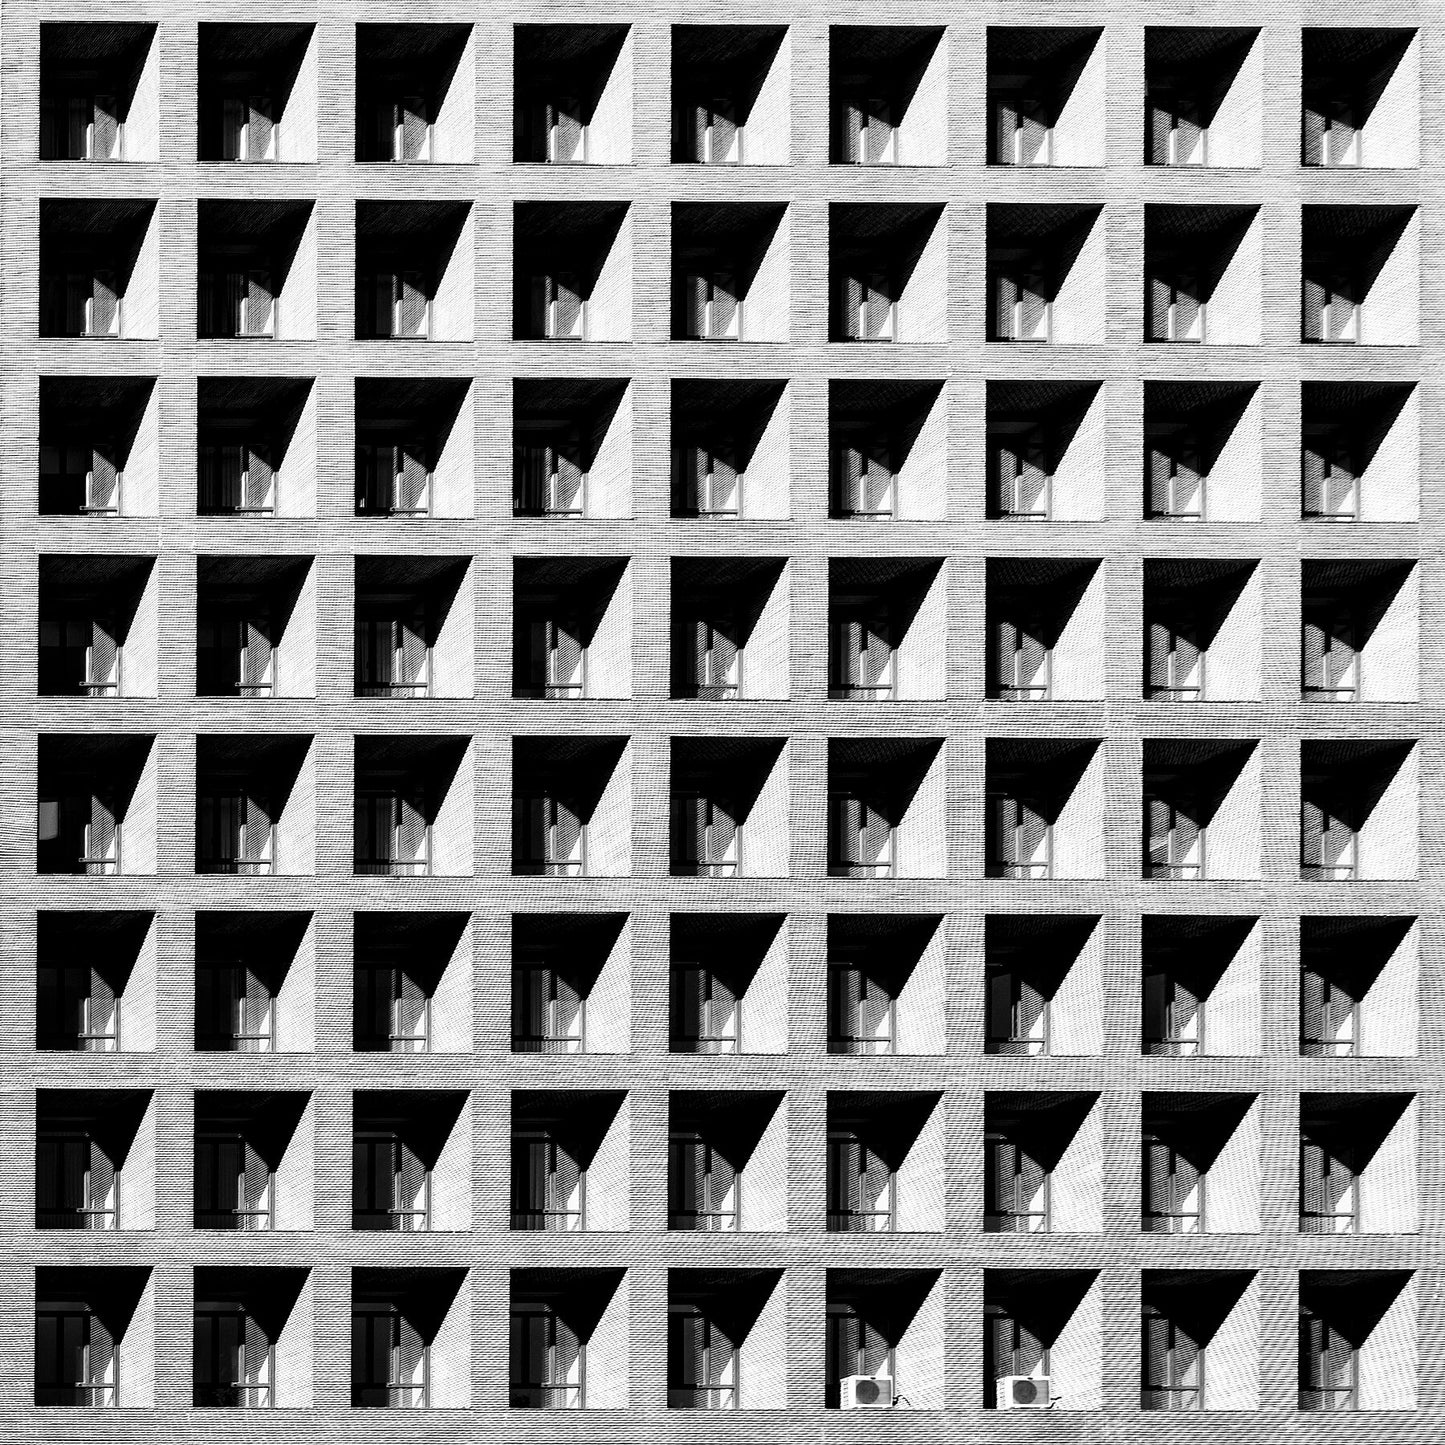 MINISTERIO DE SANDIDAD, POLITICA SOCIAL E IGUALDAD, MADRID, SPAIN by Francisco de Asis Cabrero . Black & white architectural photograph by Eric Schneider Photography